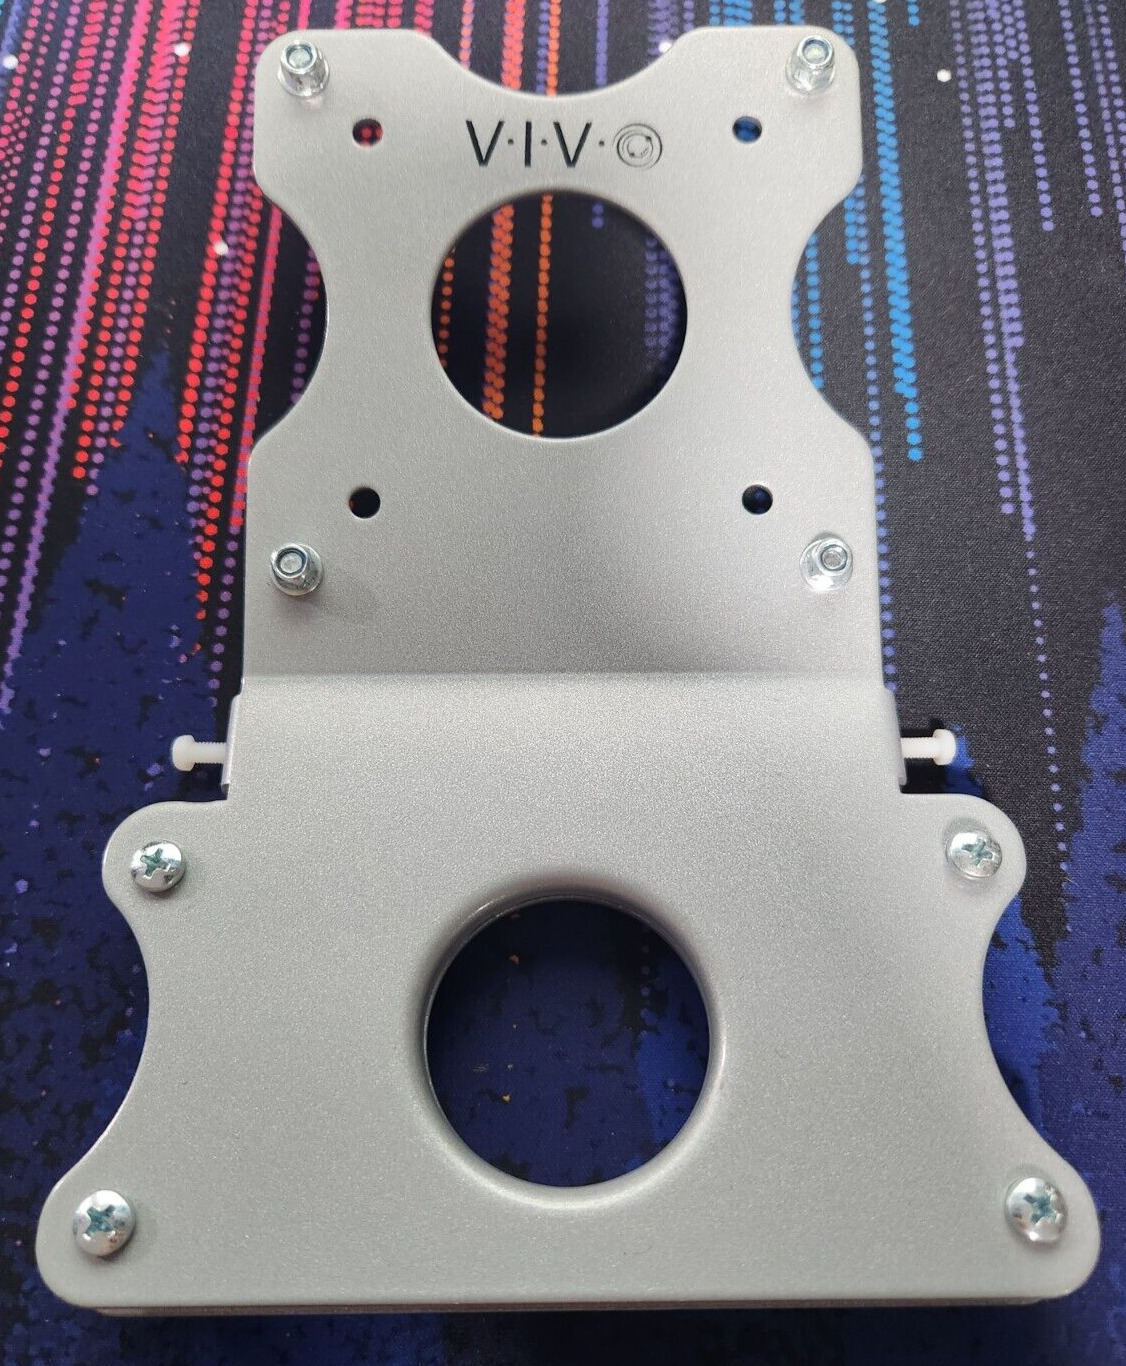 VIVO Adapter VESA Mount Kit, Bracket Set for Apple 21.5 inch and 27 inch iMac